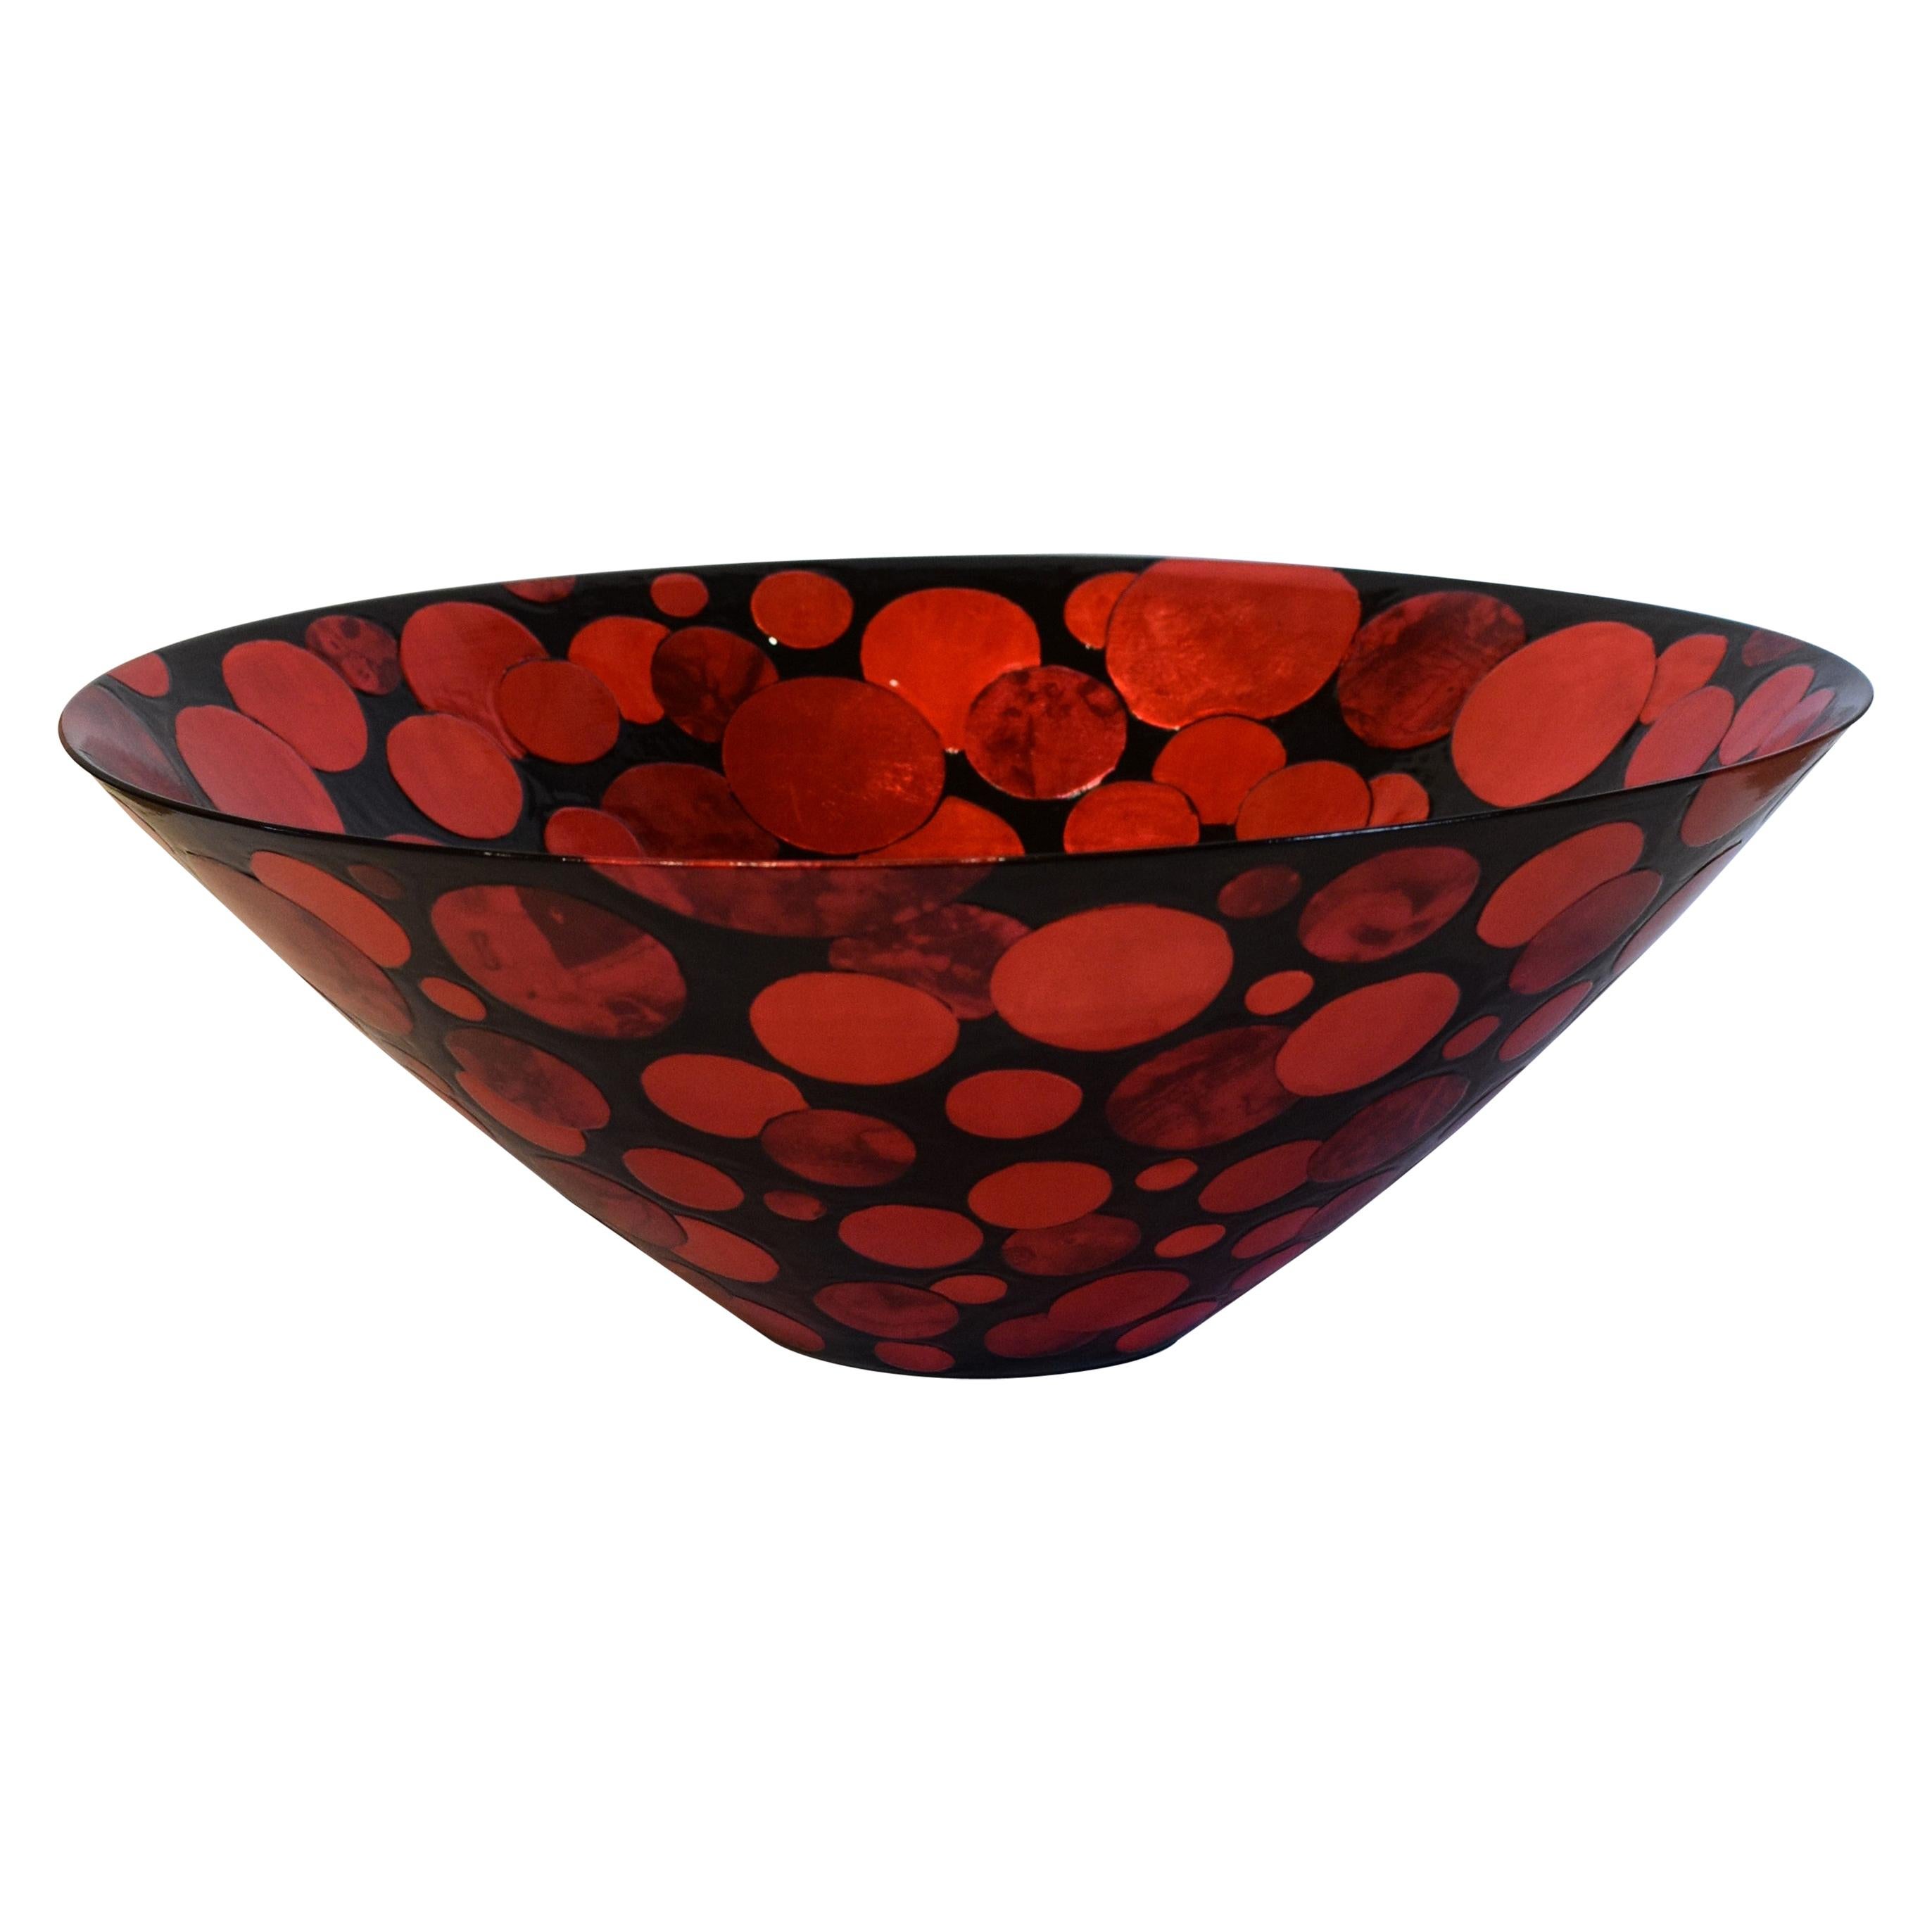 Japanese Contemporary Red Black Porcelain Vase by Master Artist For Sale